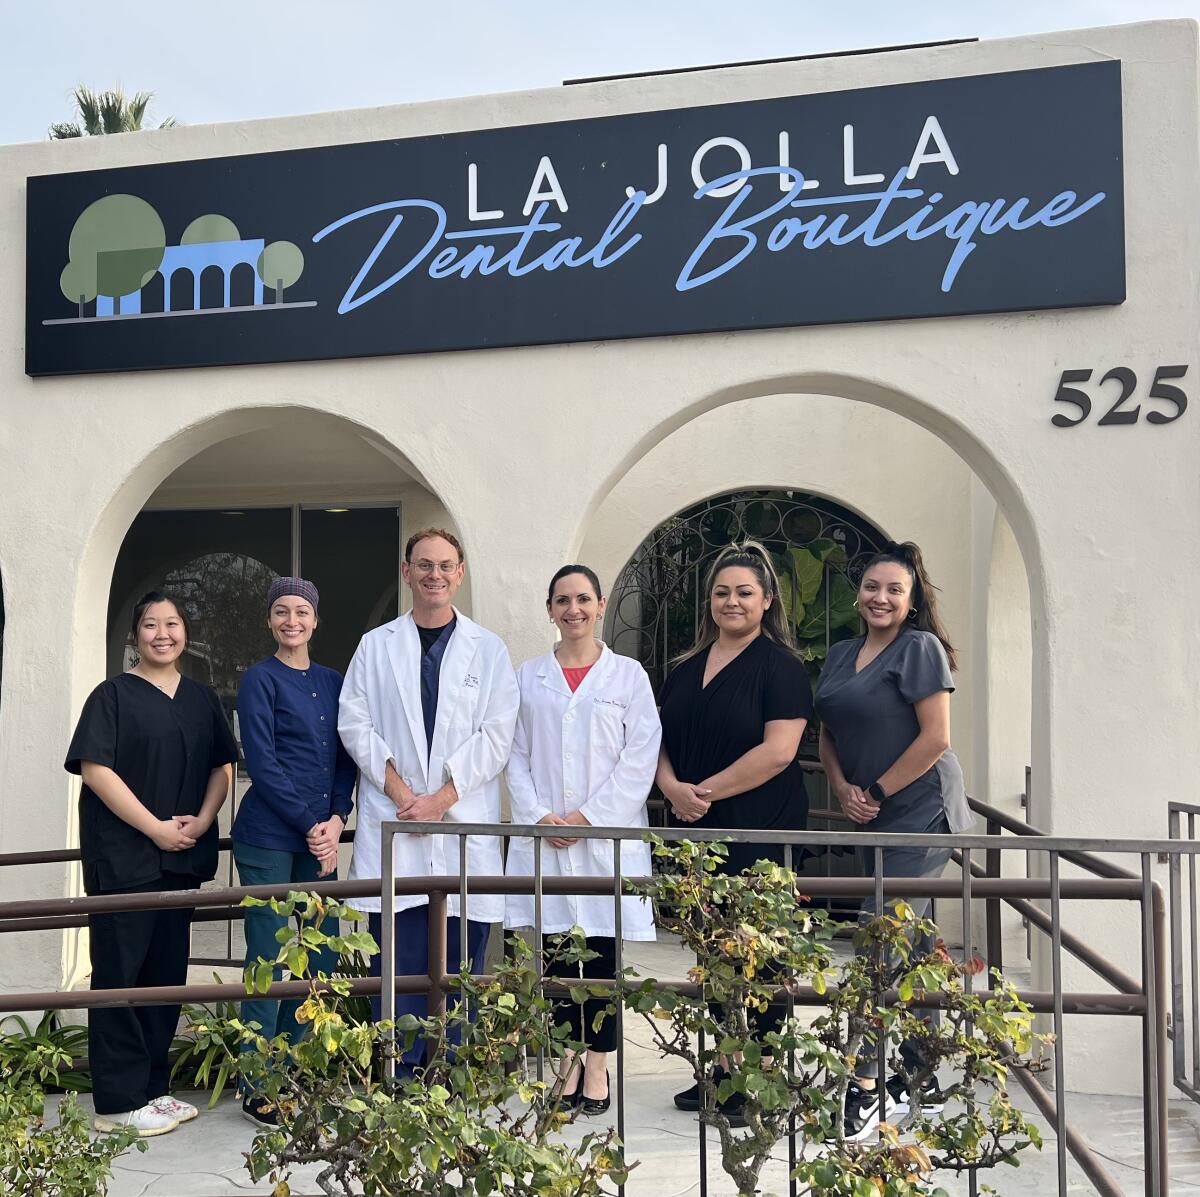 La Jolla Dental Boutique completed a renovation a few months ago.